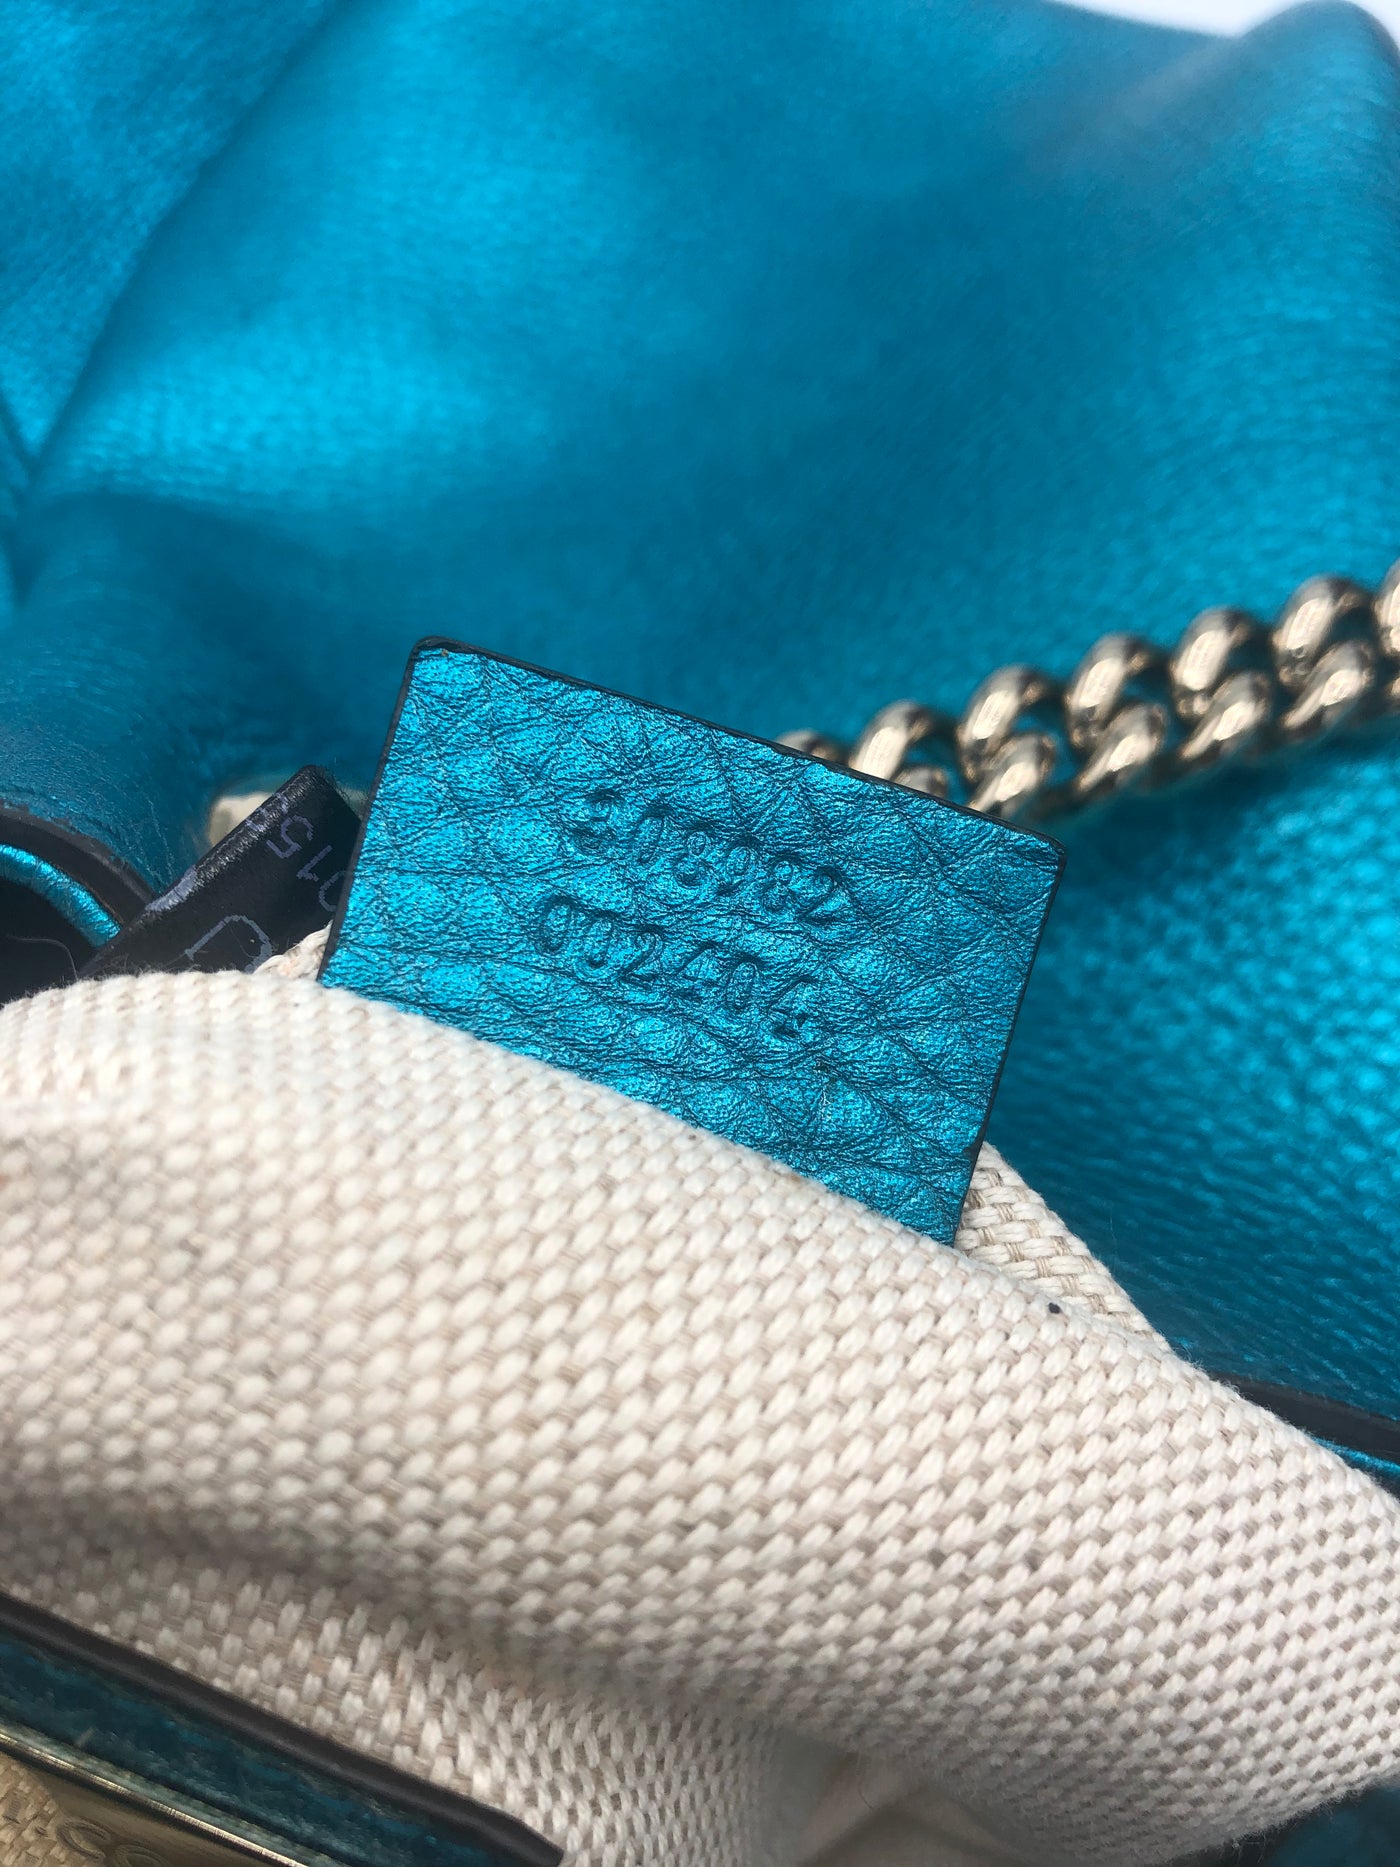 GUCCI Large Soho Metallic Blue Tassel Chain Handbag